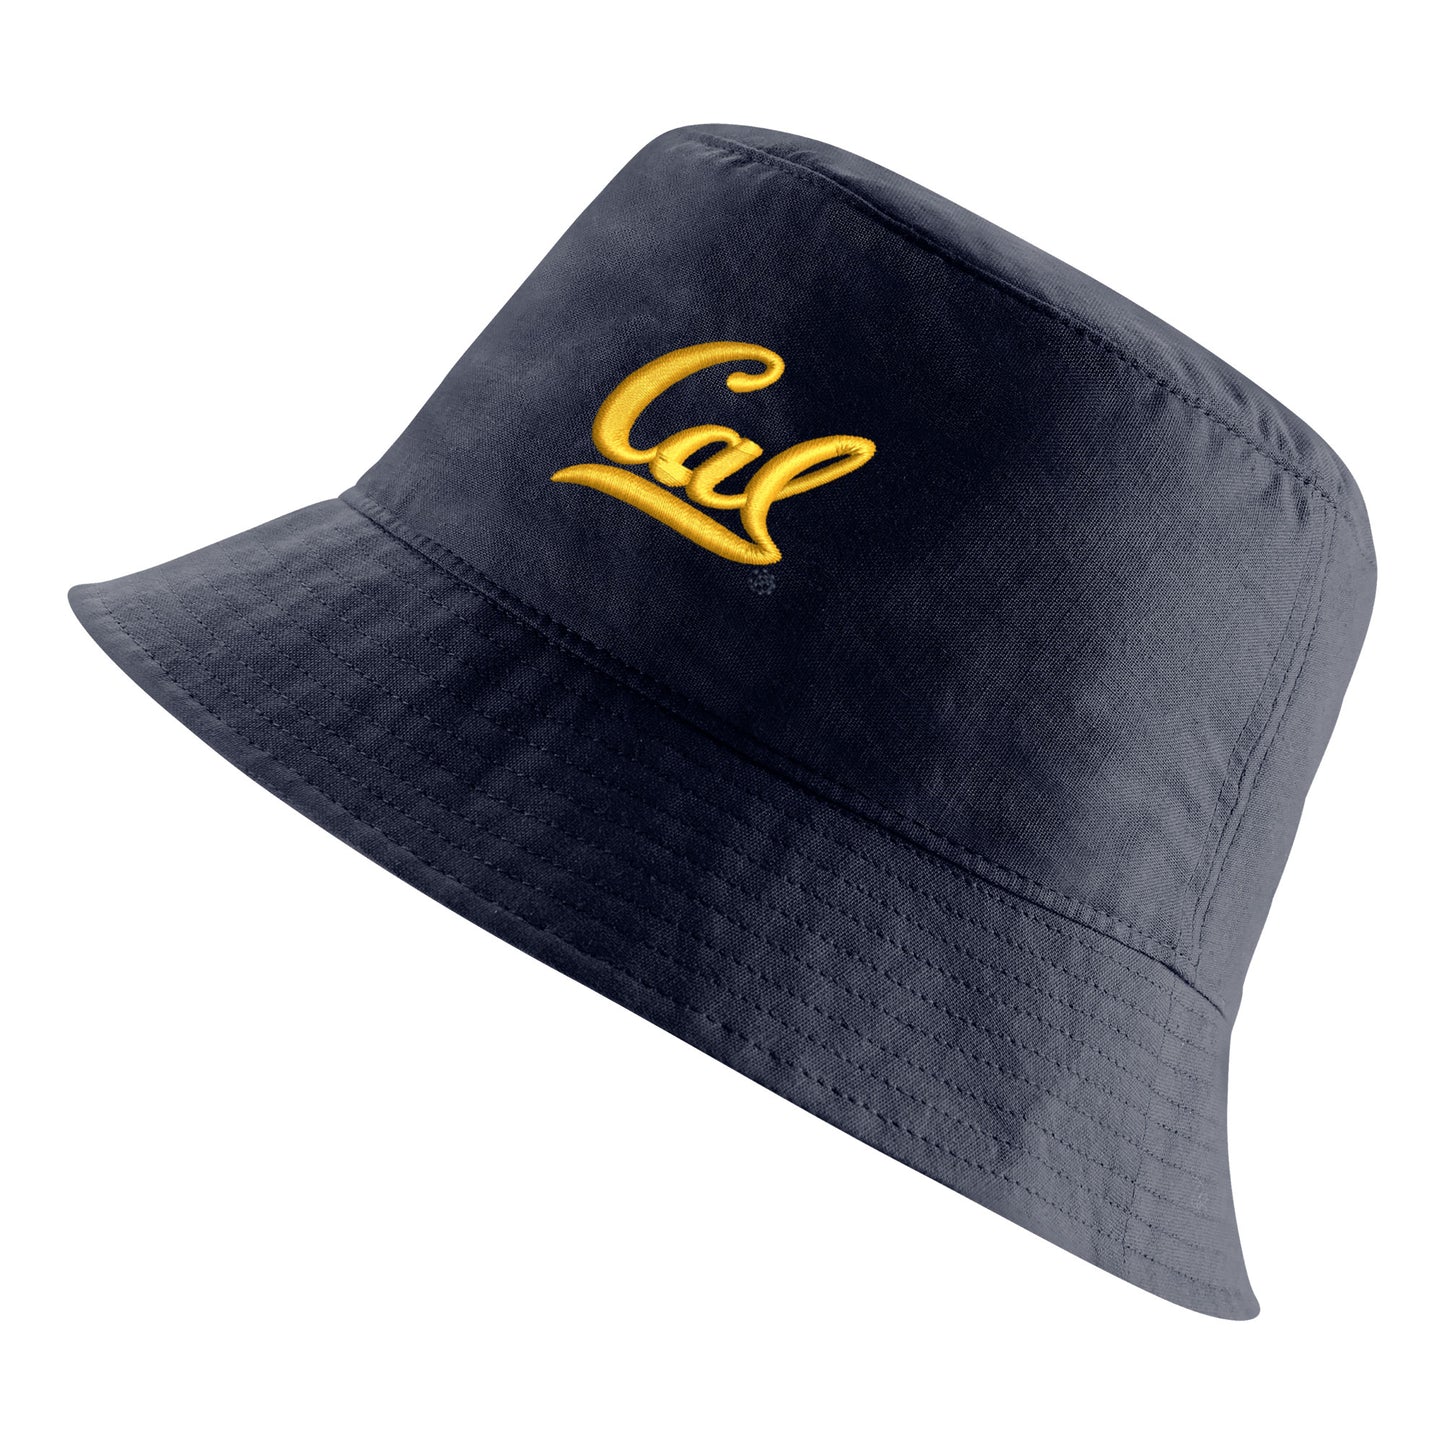 U.C. Berkeley Cal embroidered Nike bucket hat-Navy-Shop College Wear